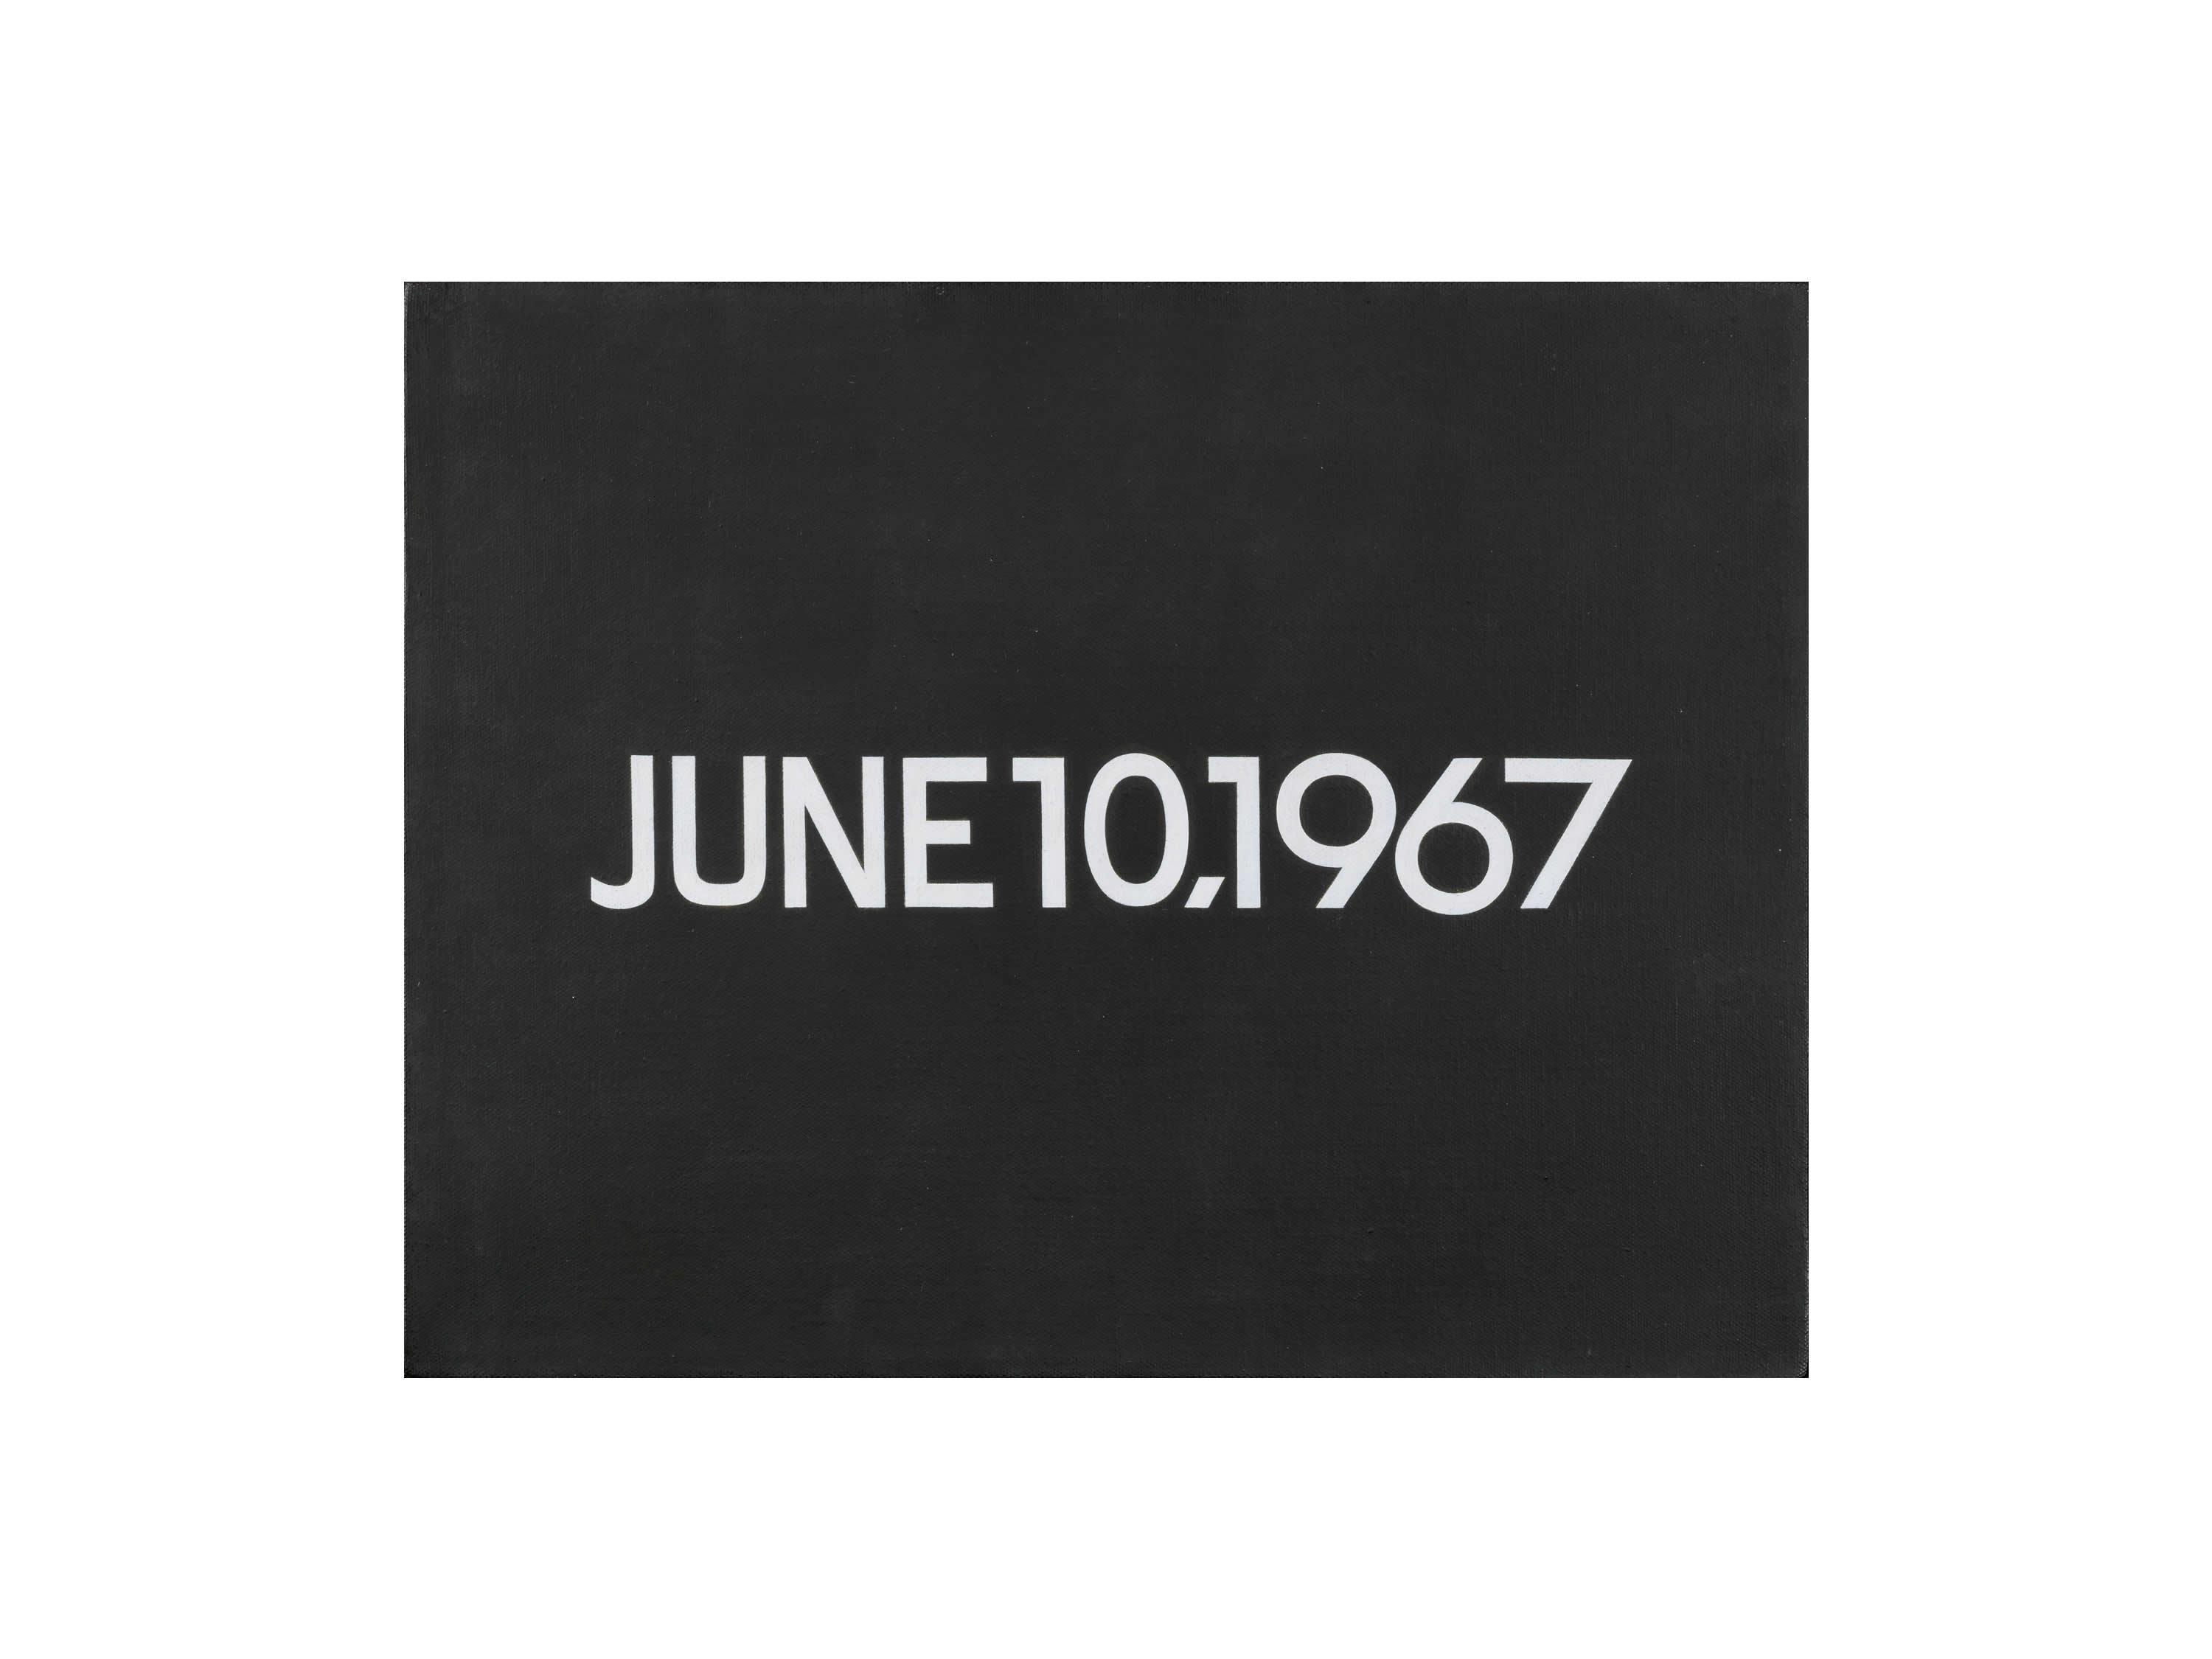 On Kawara: JUNE 10, 1967, Liquitex on canvas, 25.4 x 33 cm, 1967.